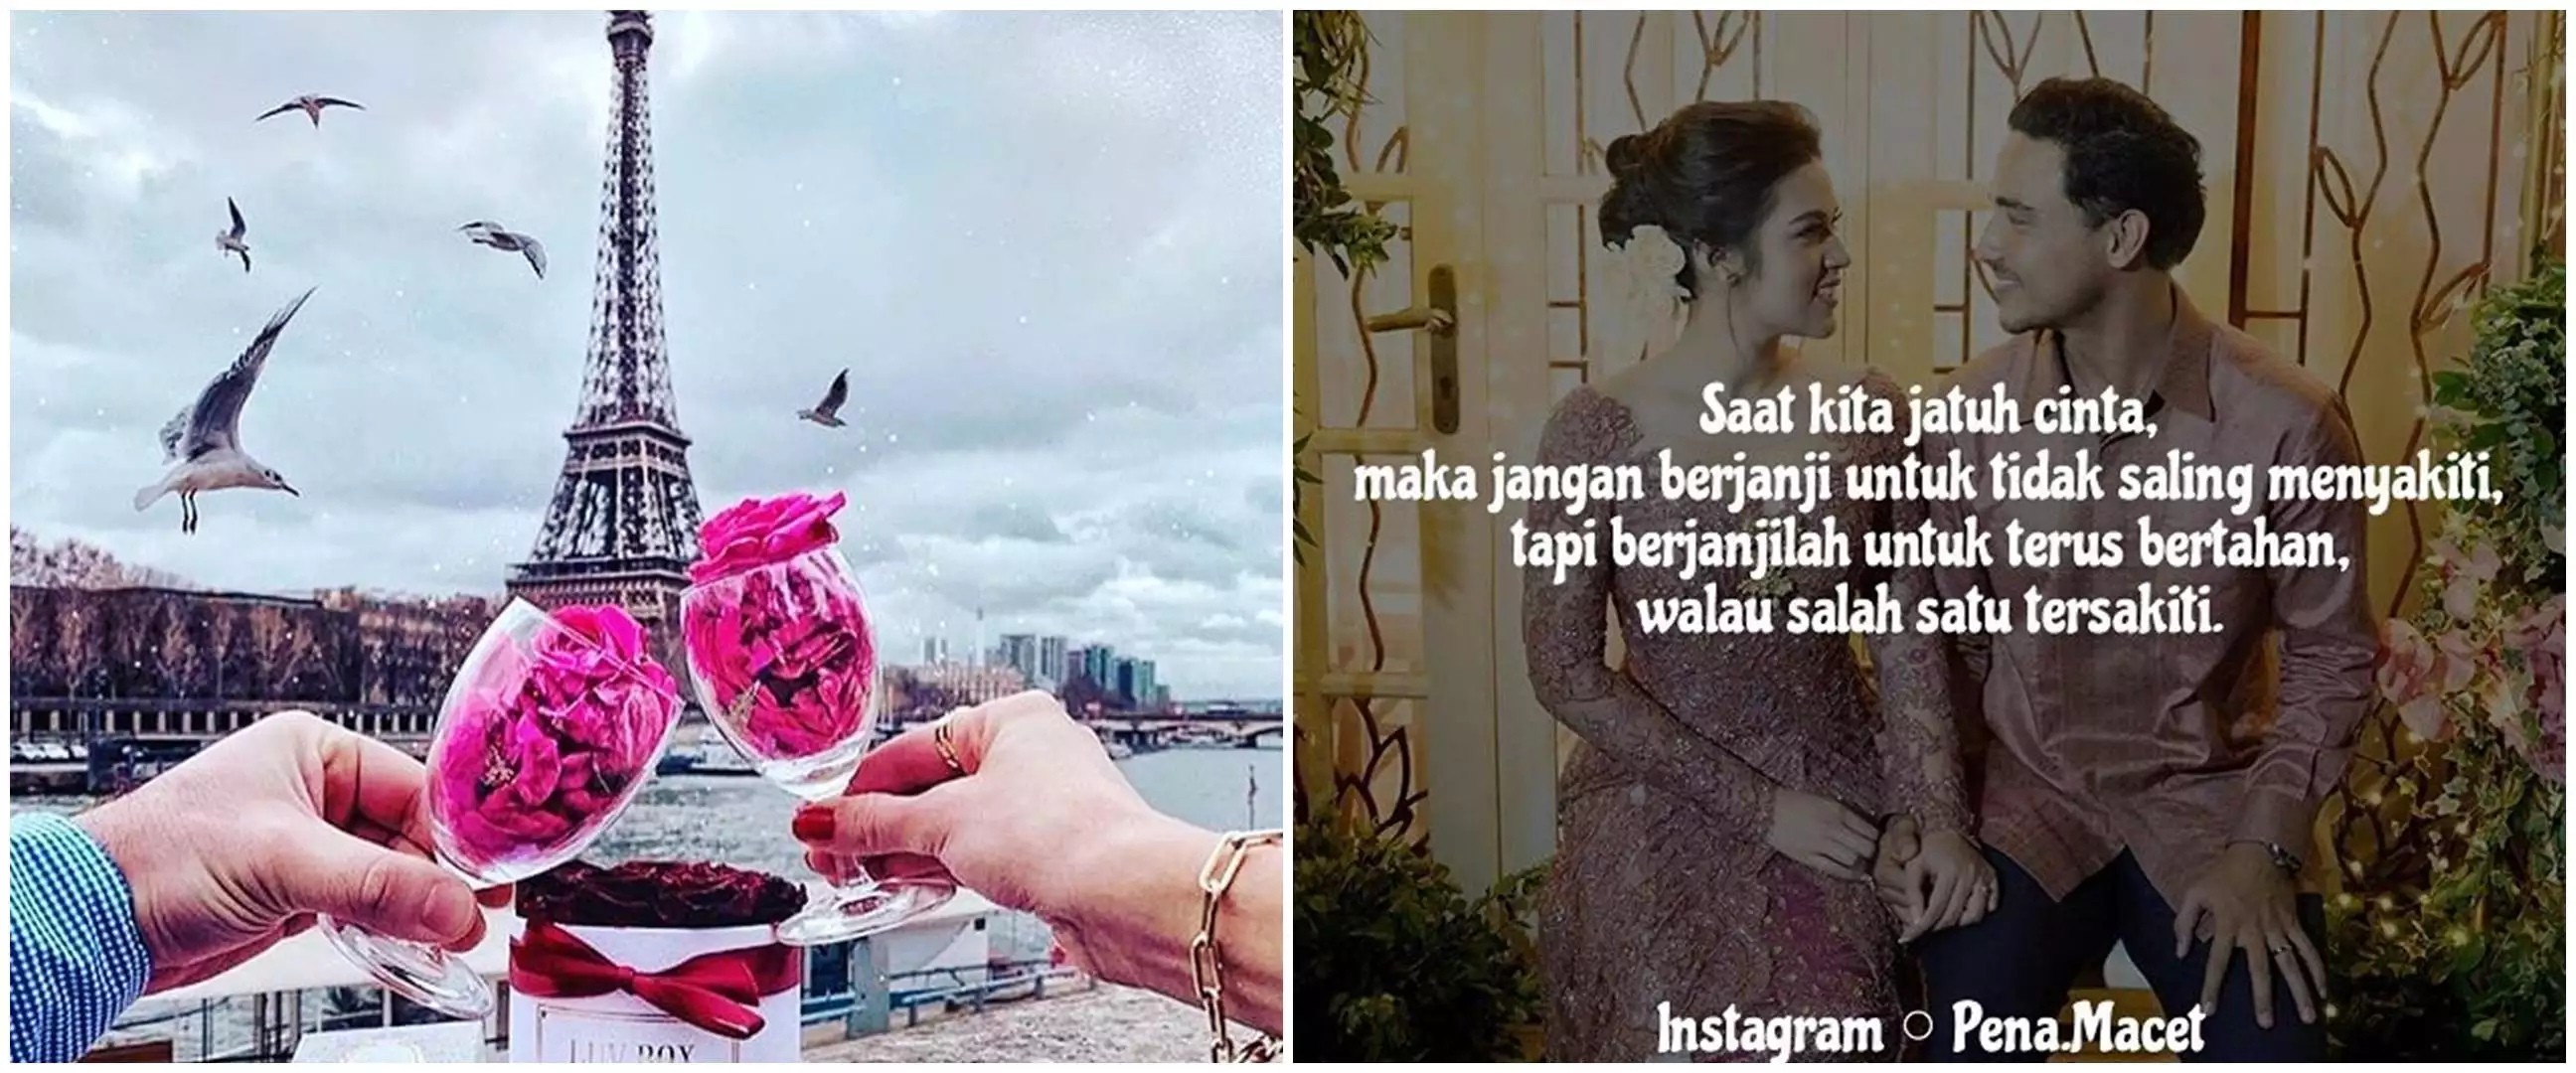 111 Kata-kata ucapan valentine romantis, bisa jadi caption Instagram